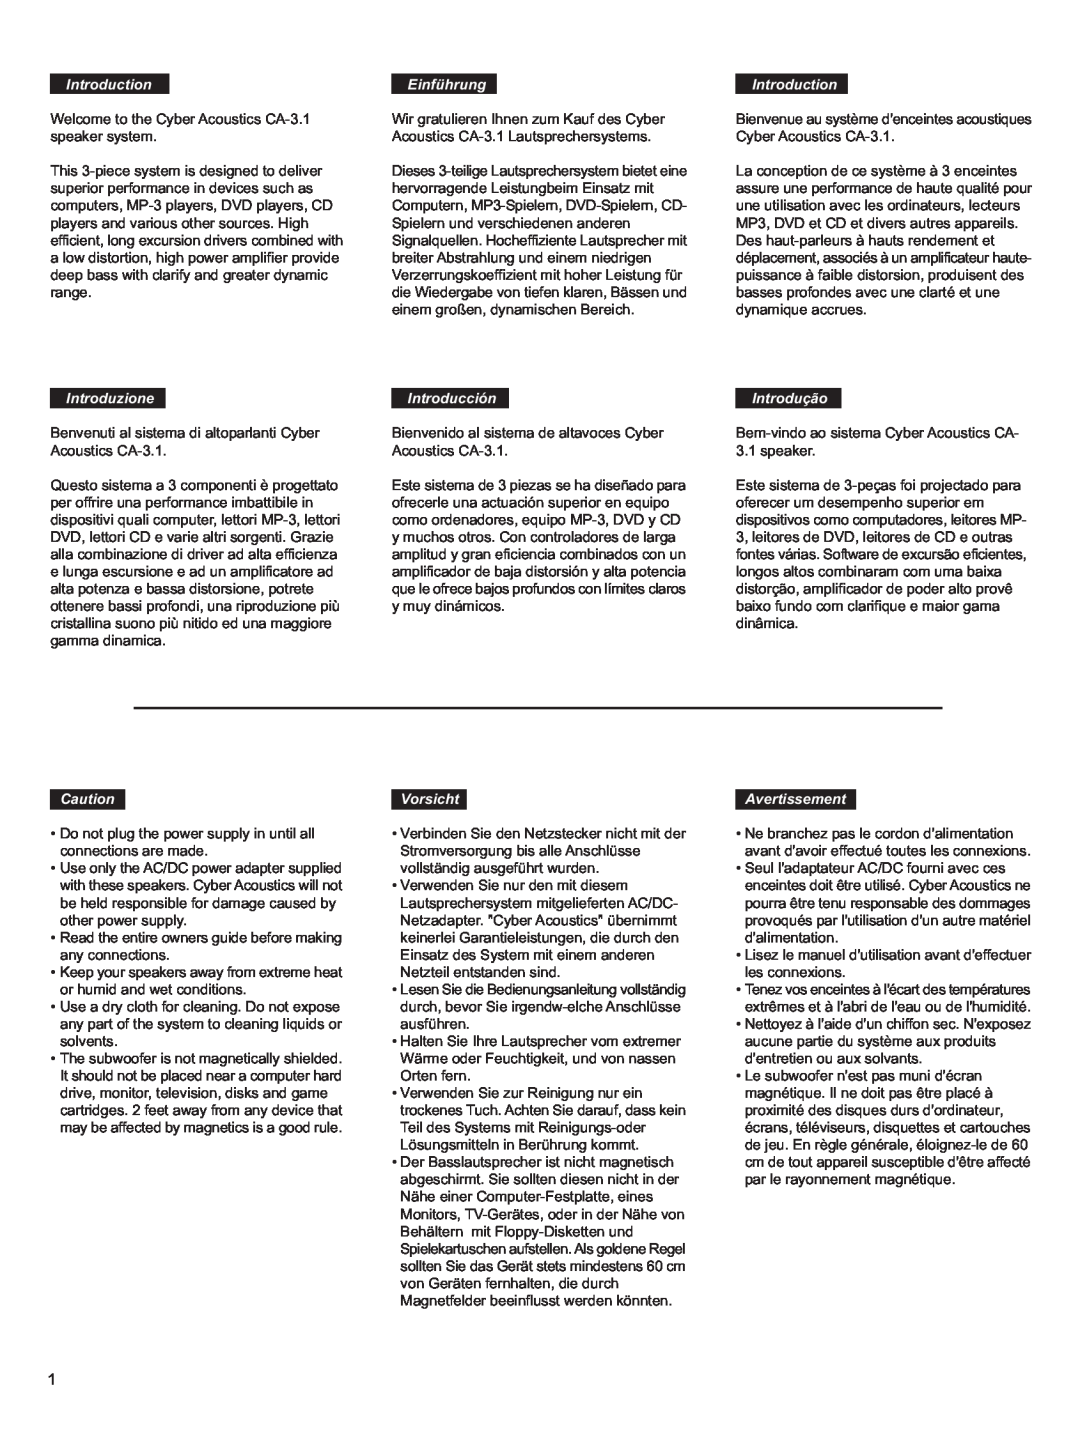 Cyber Acoustics CA-3.1 manual Introduction, Einführung, Introduzione, Introducción, Introdução, Vorsicht, Avertissement 